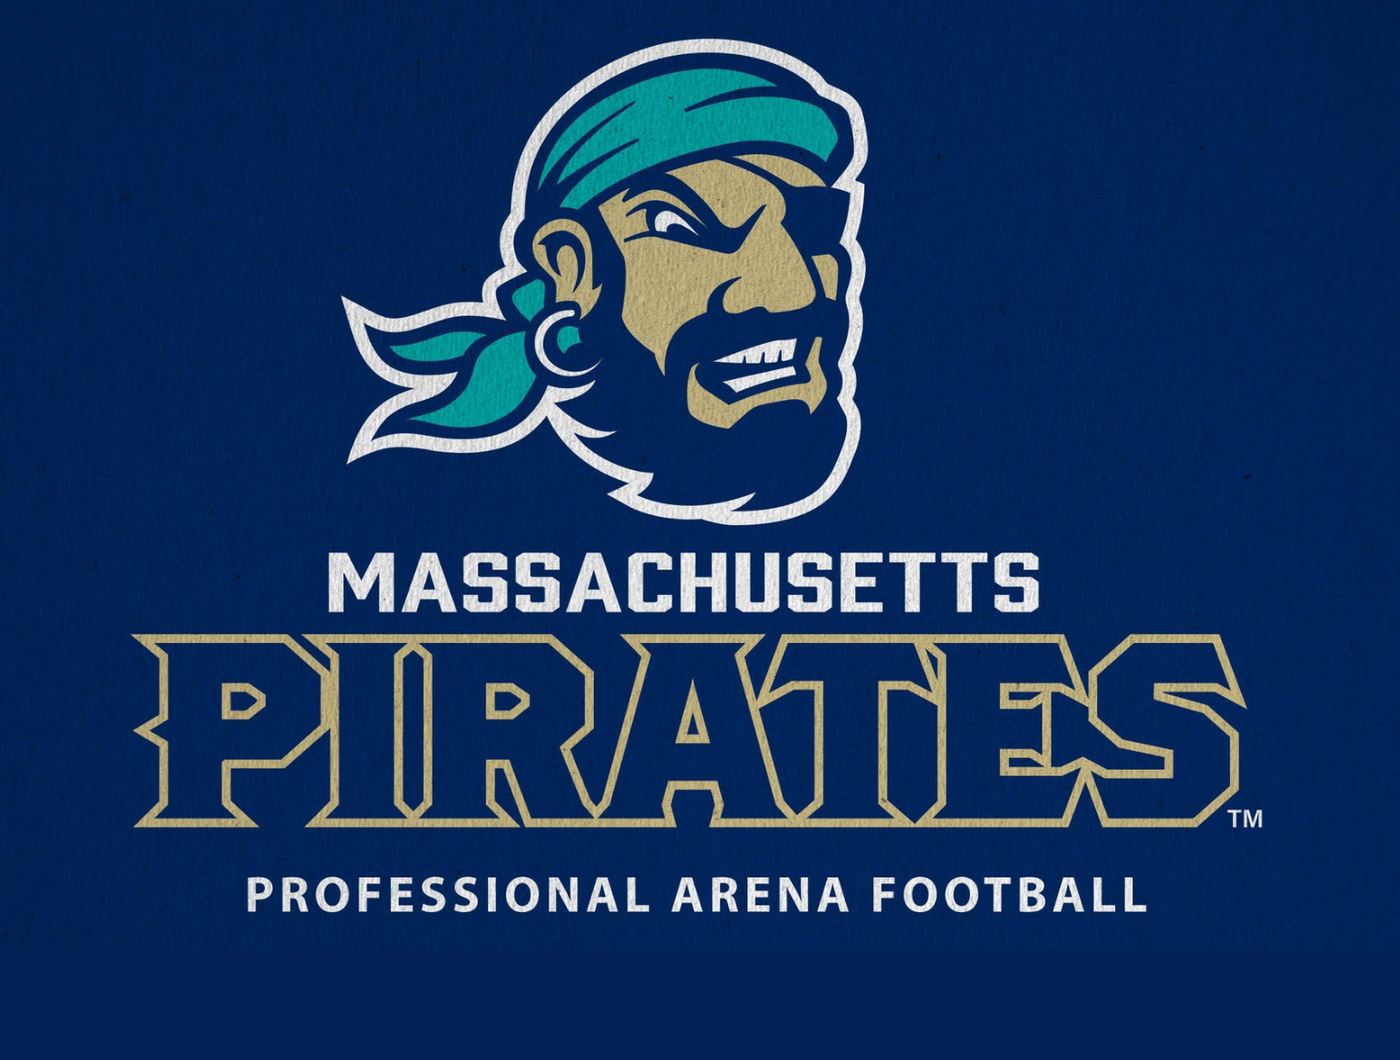 Massachusetts Pirates vs. Frisco Fighters